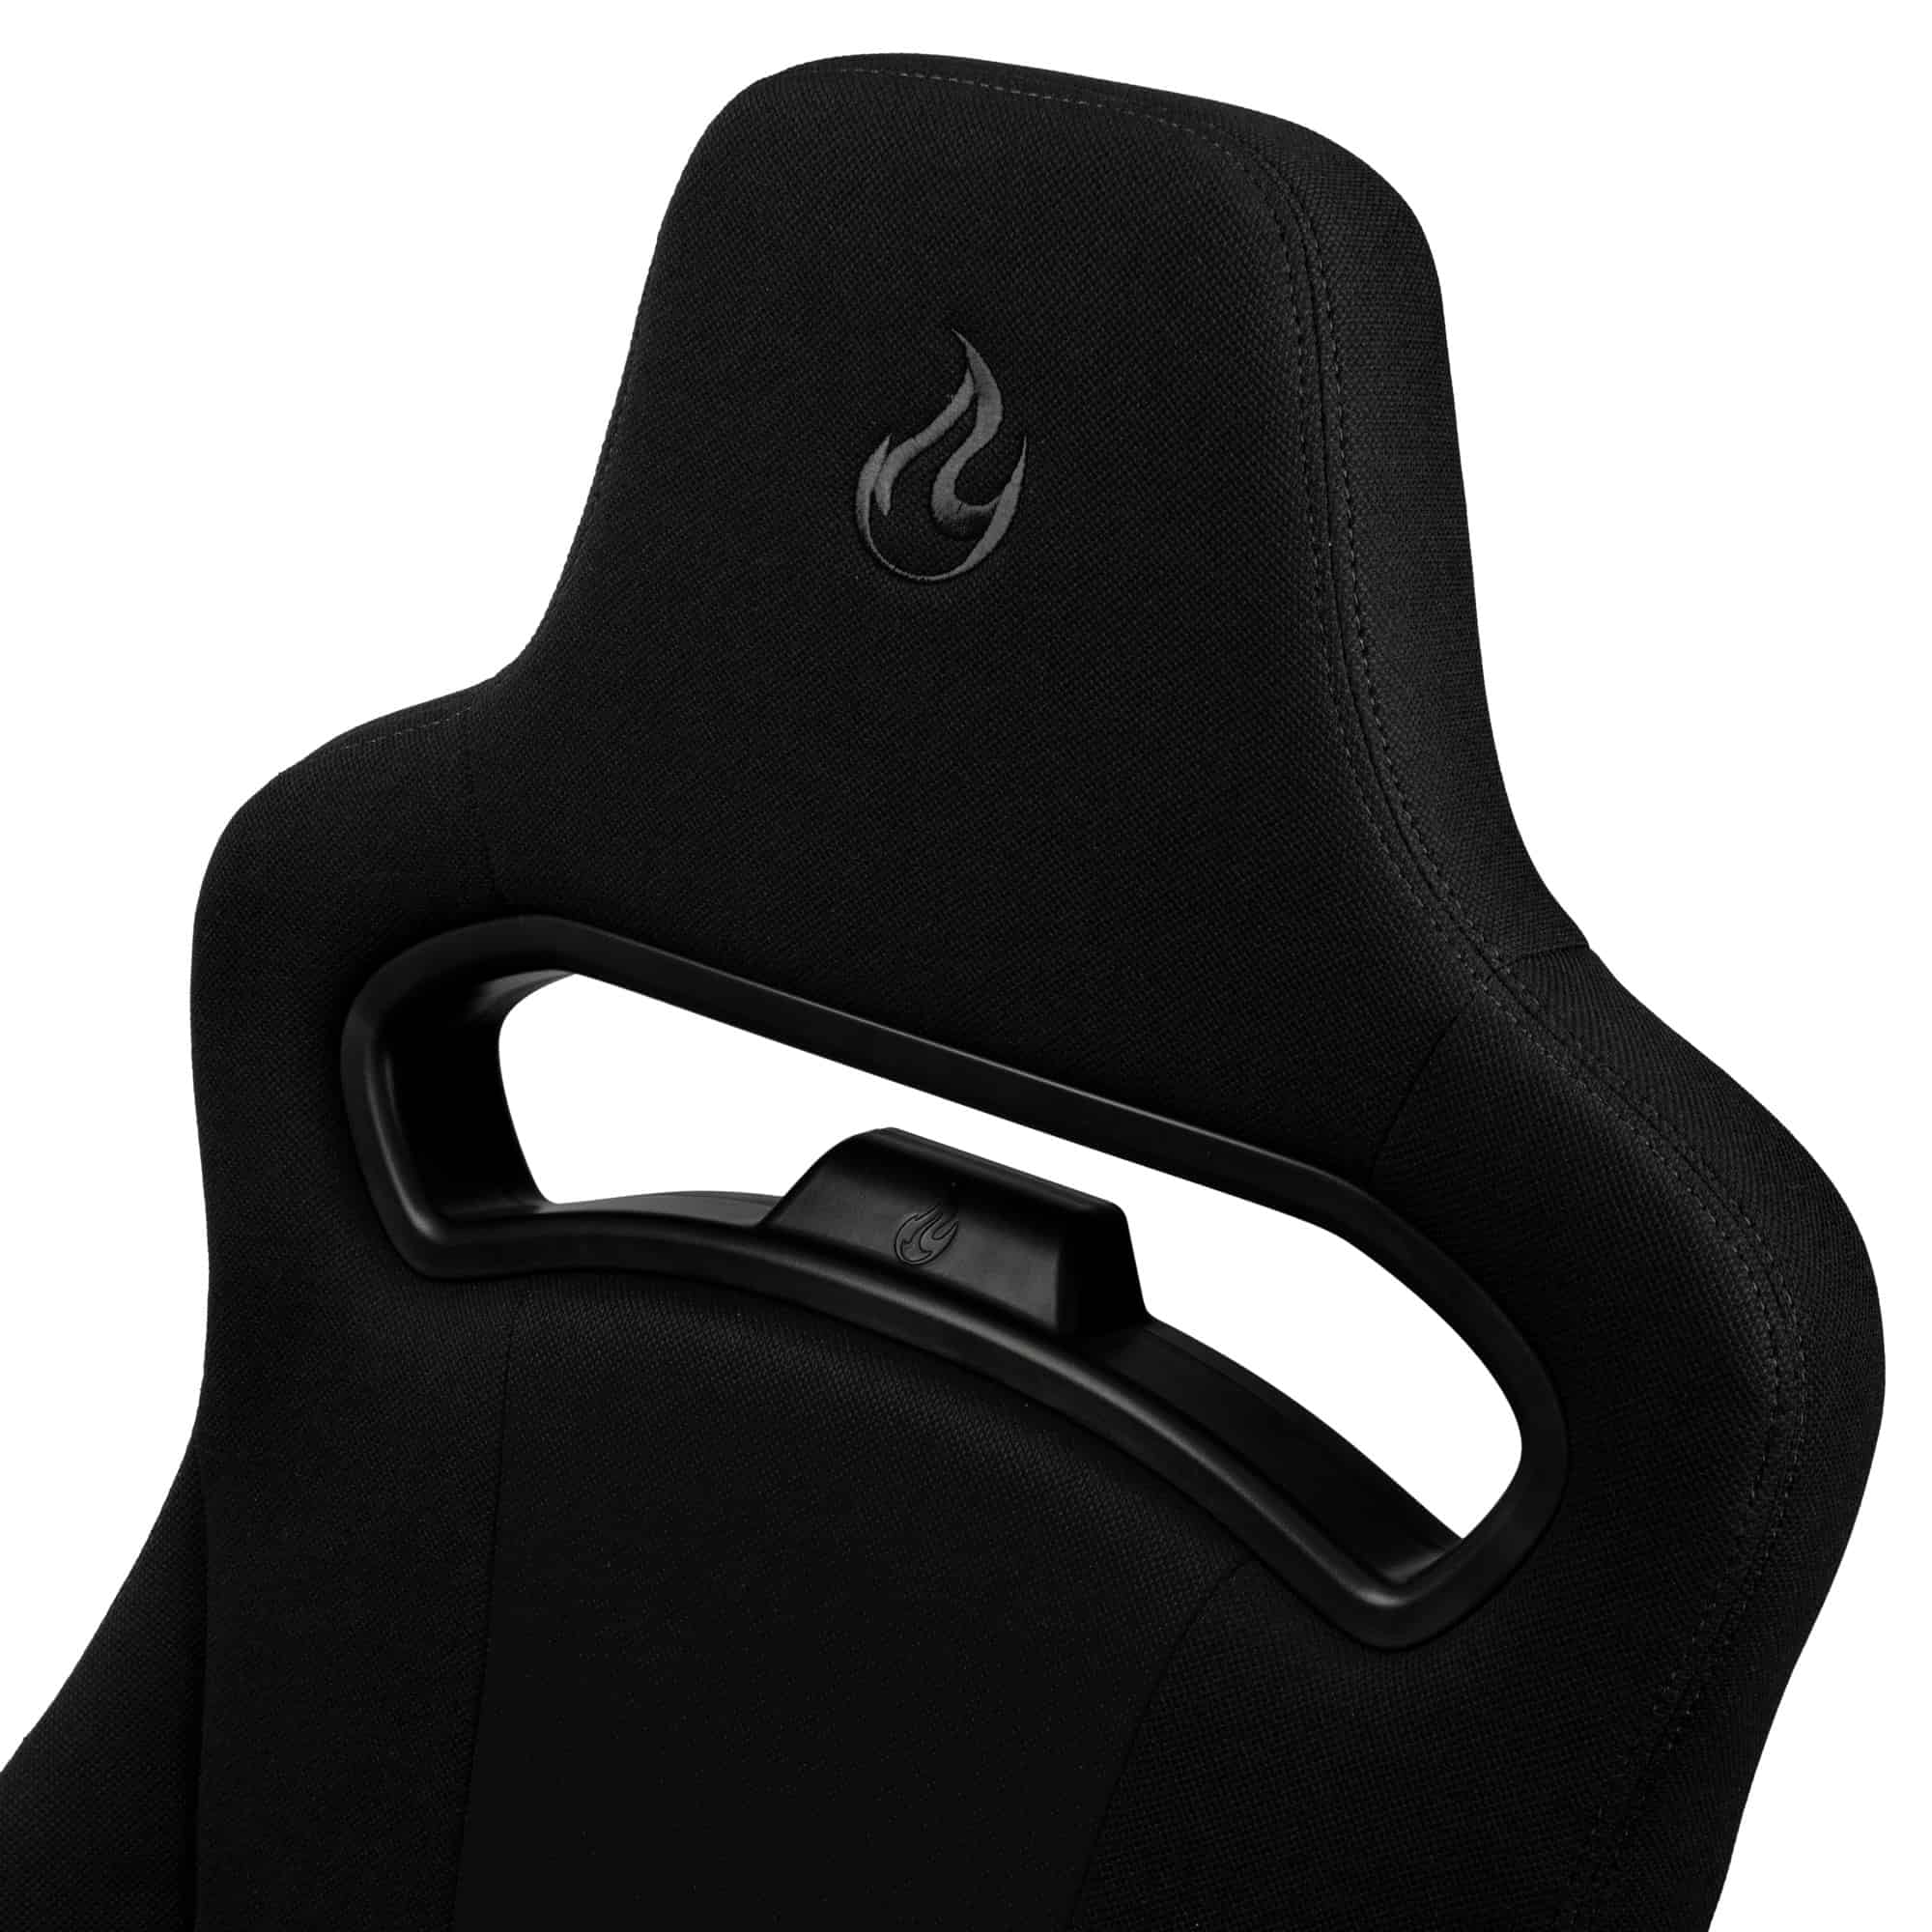 Nitro Concepts E250 Series Gaming Chair Black